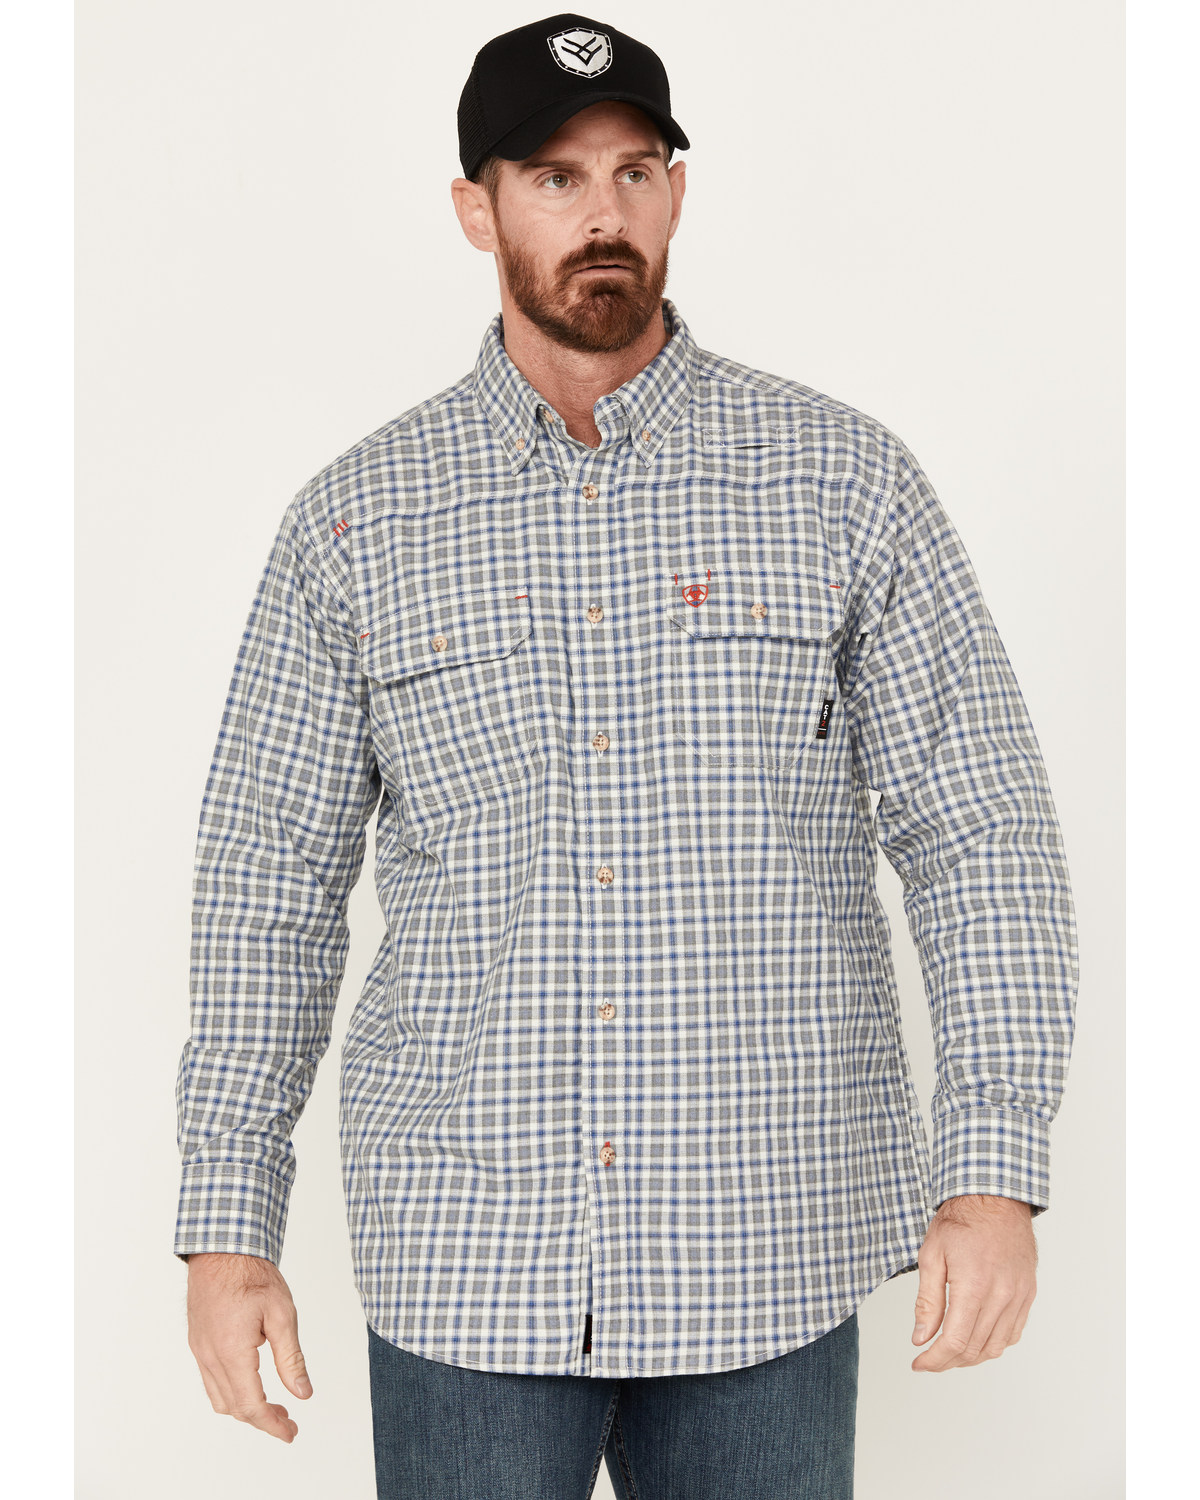 Ariat Men's FR Plaid Print Featherlight Long Sleeve Button Down Work Shirt